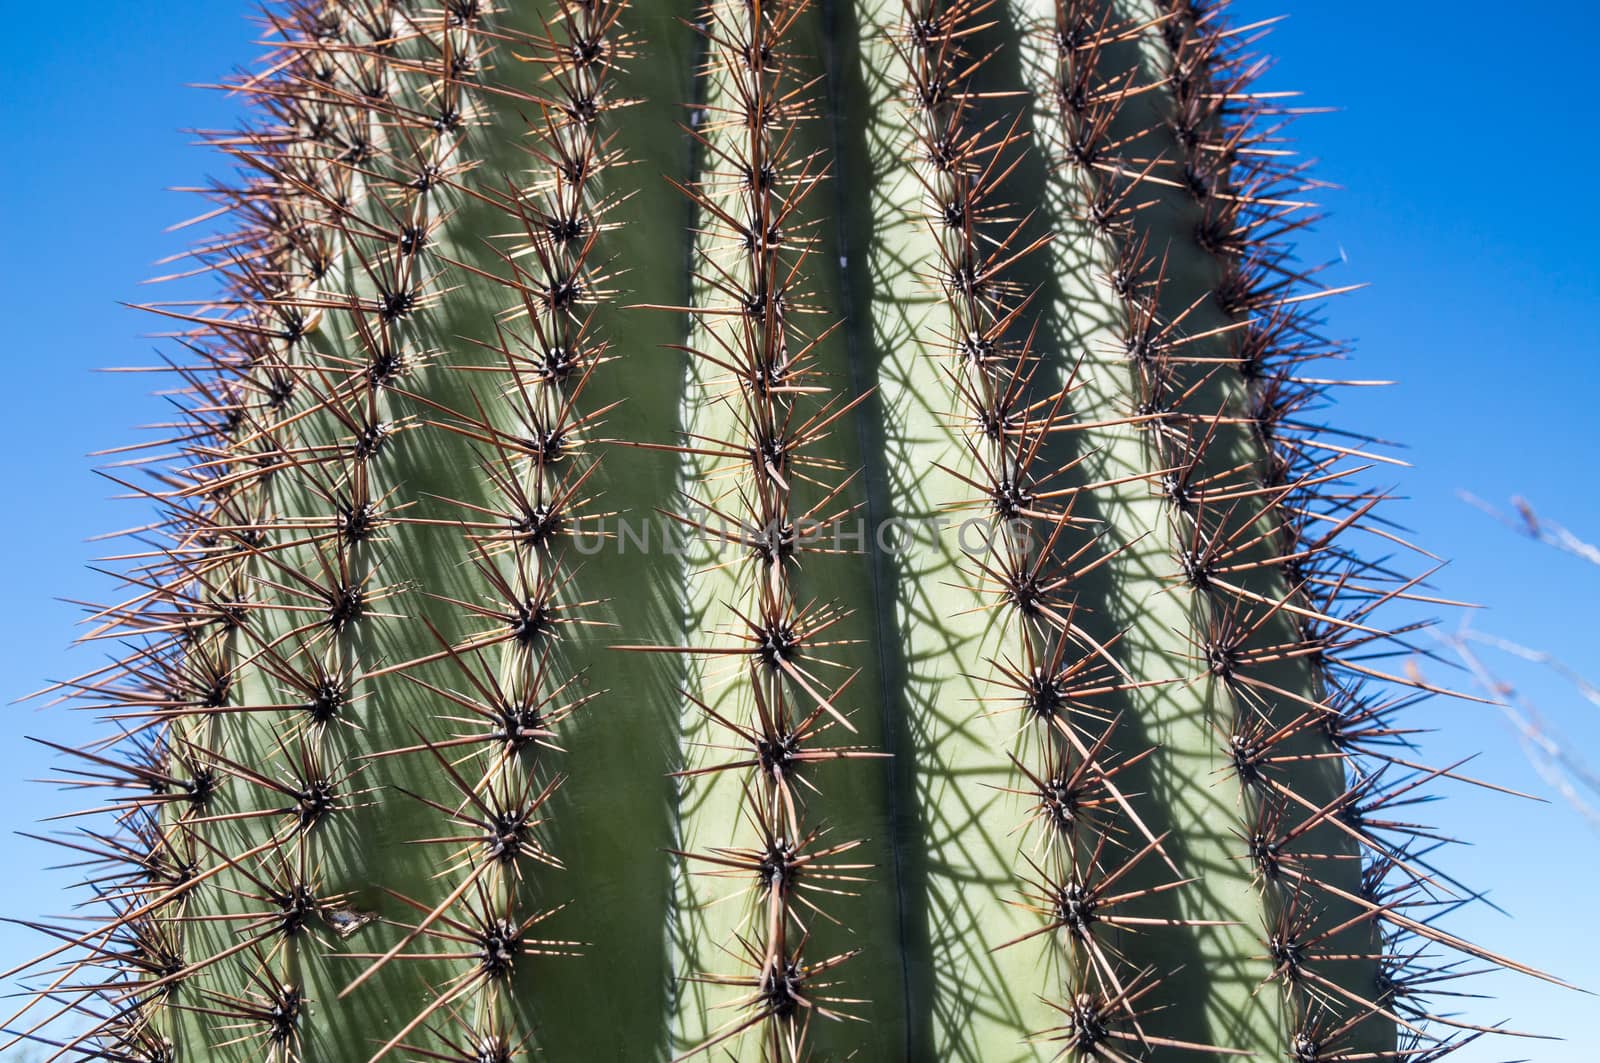 Saguaro details